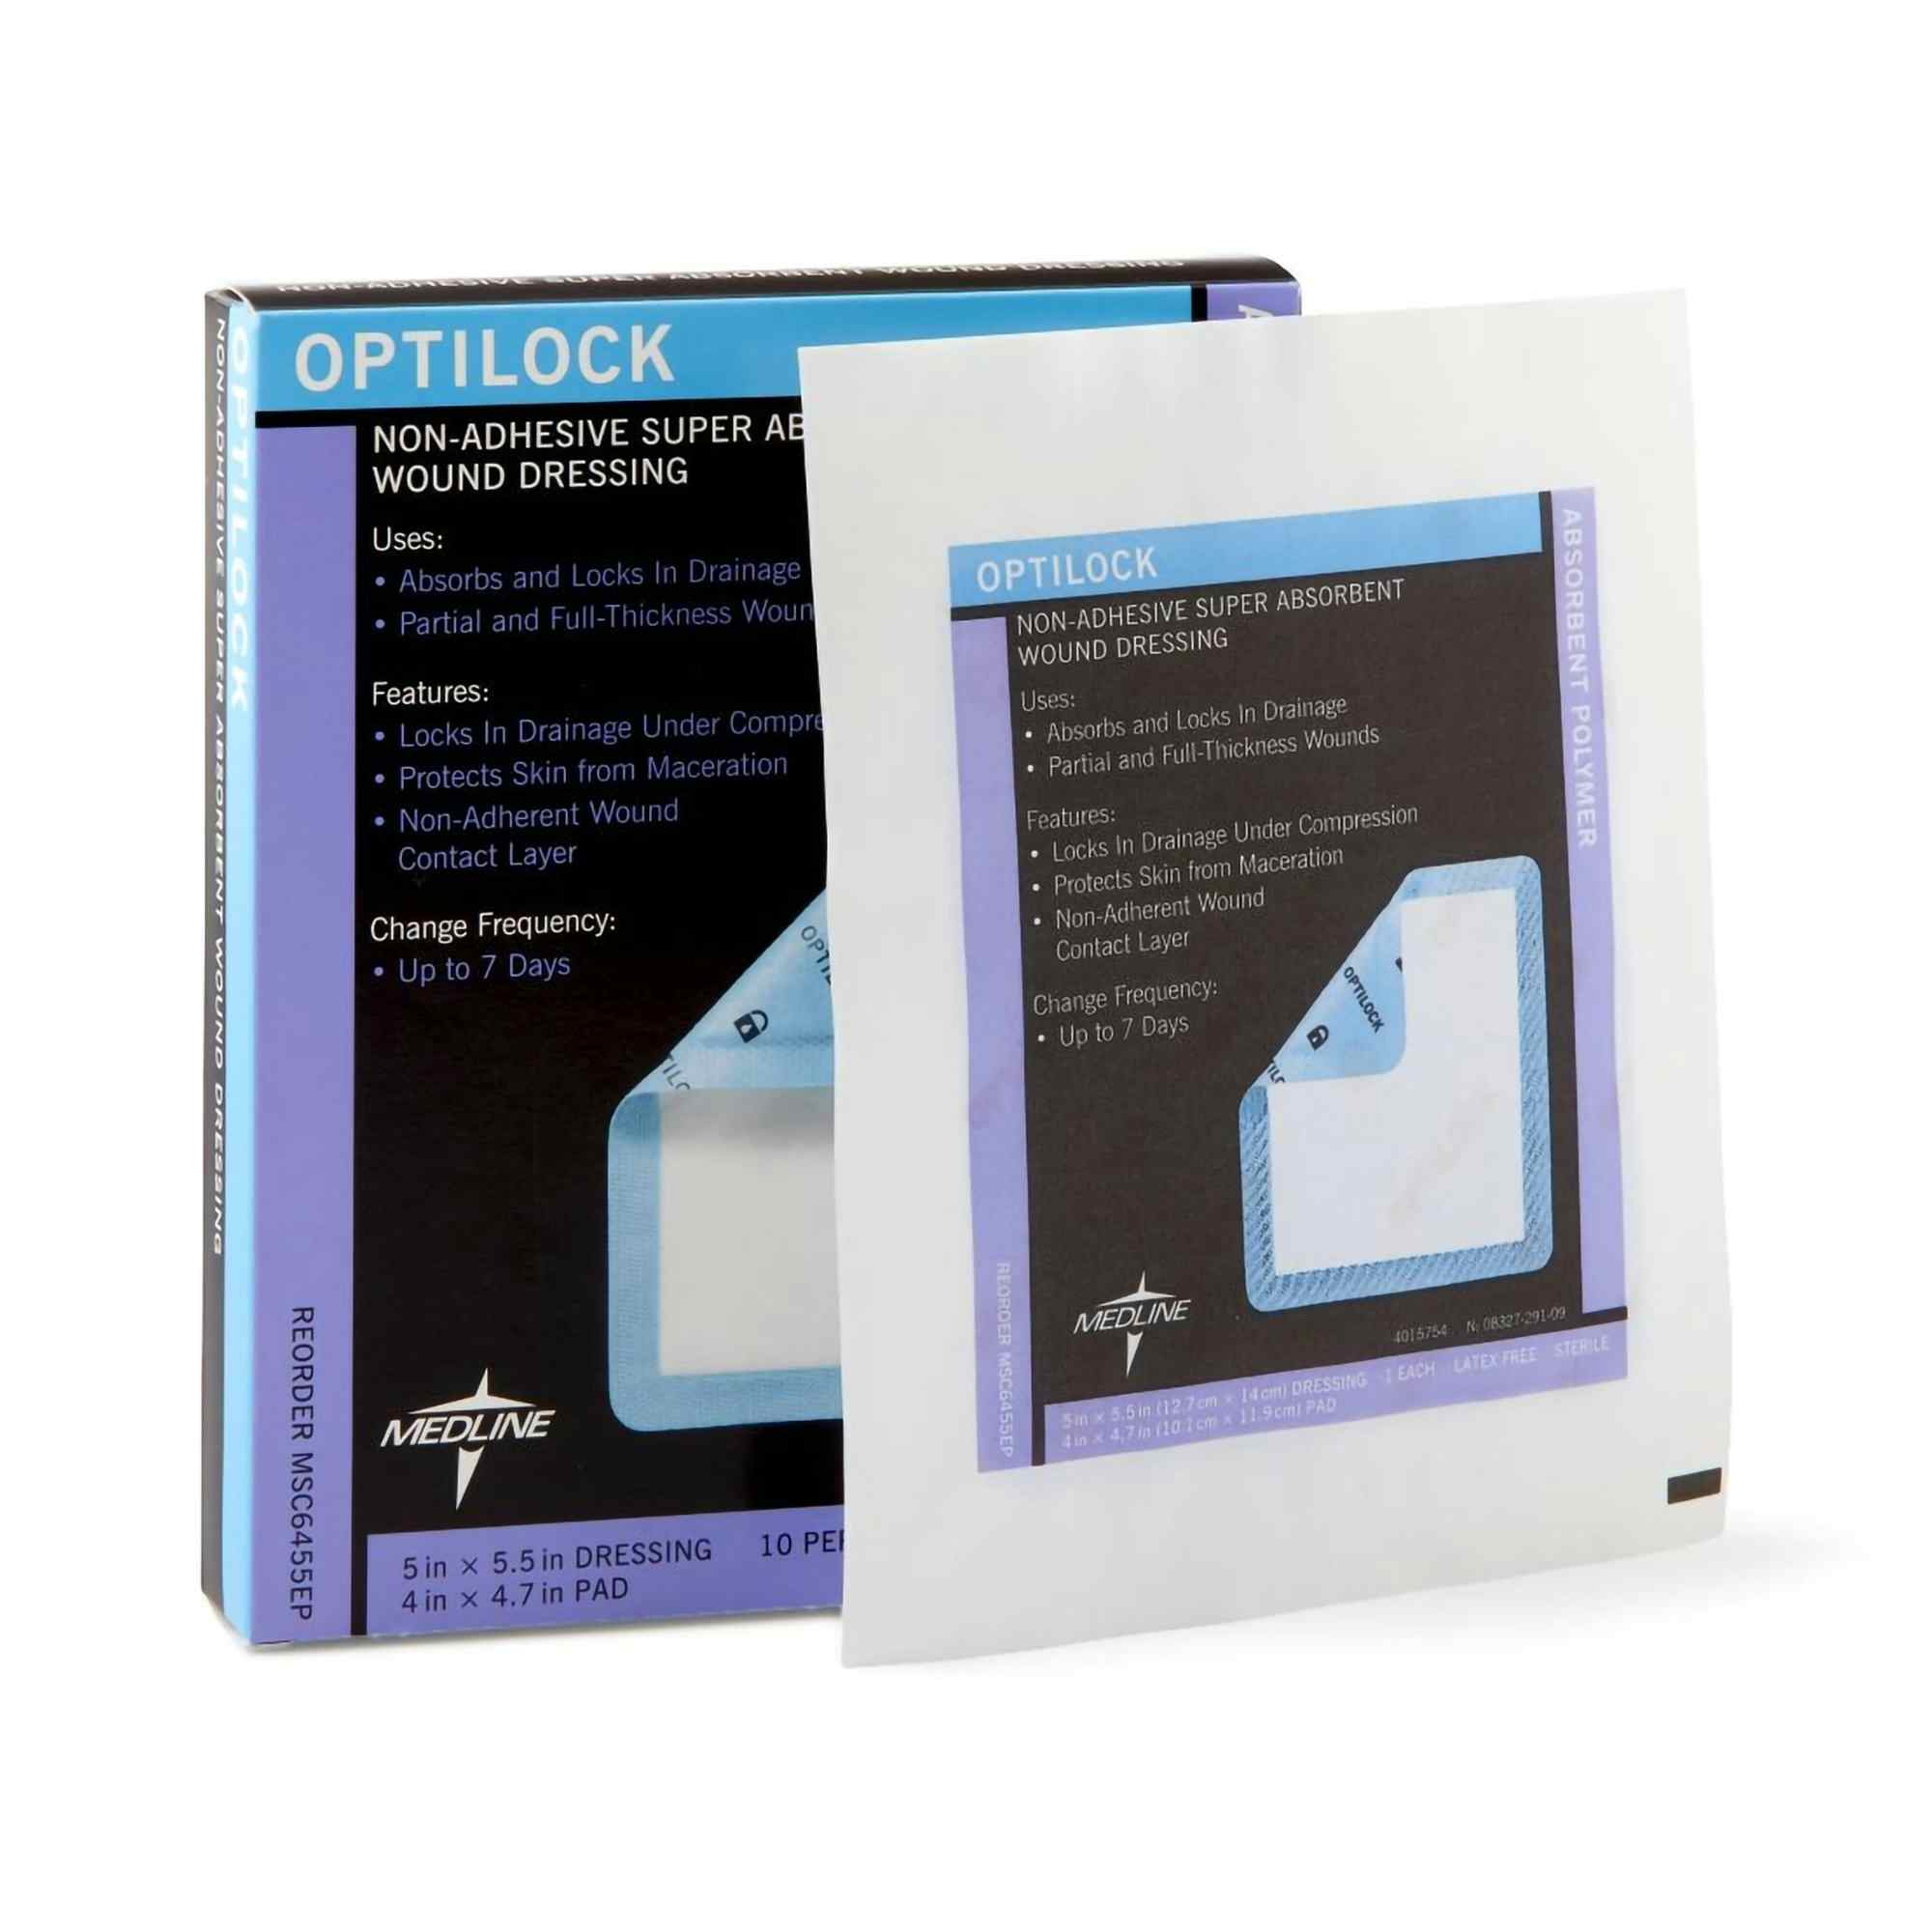 Medline Optilock Non-Adhesive Super Absorbent Wound Dressing, 5 X 5.5", MSC6455EP, Box of 10